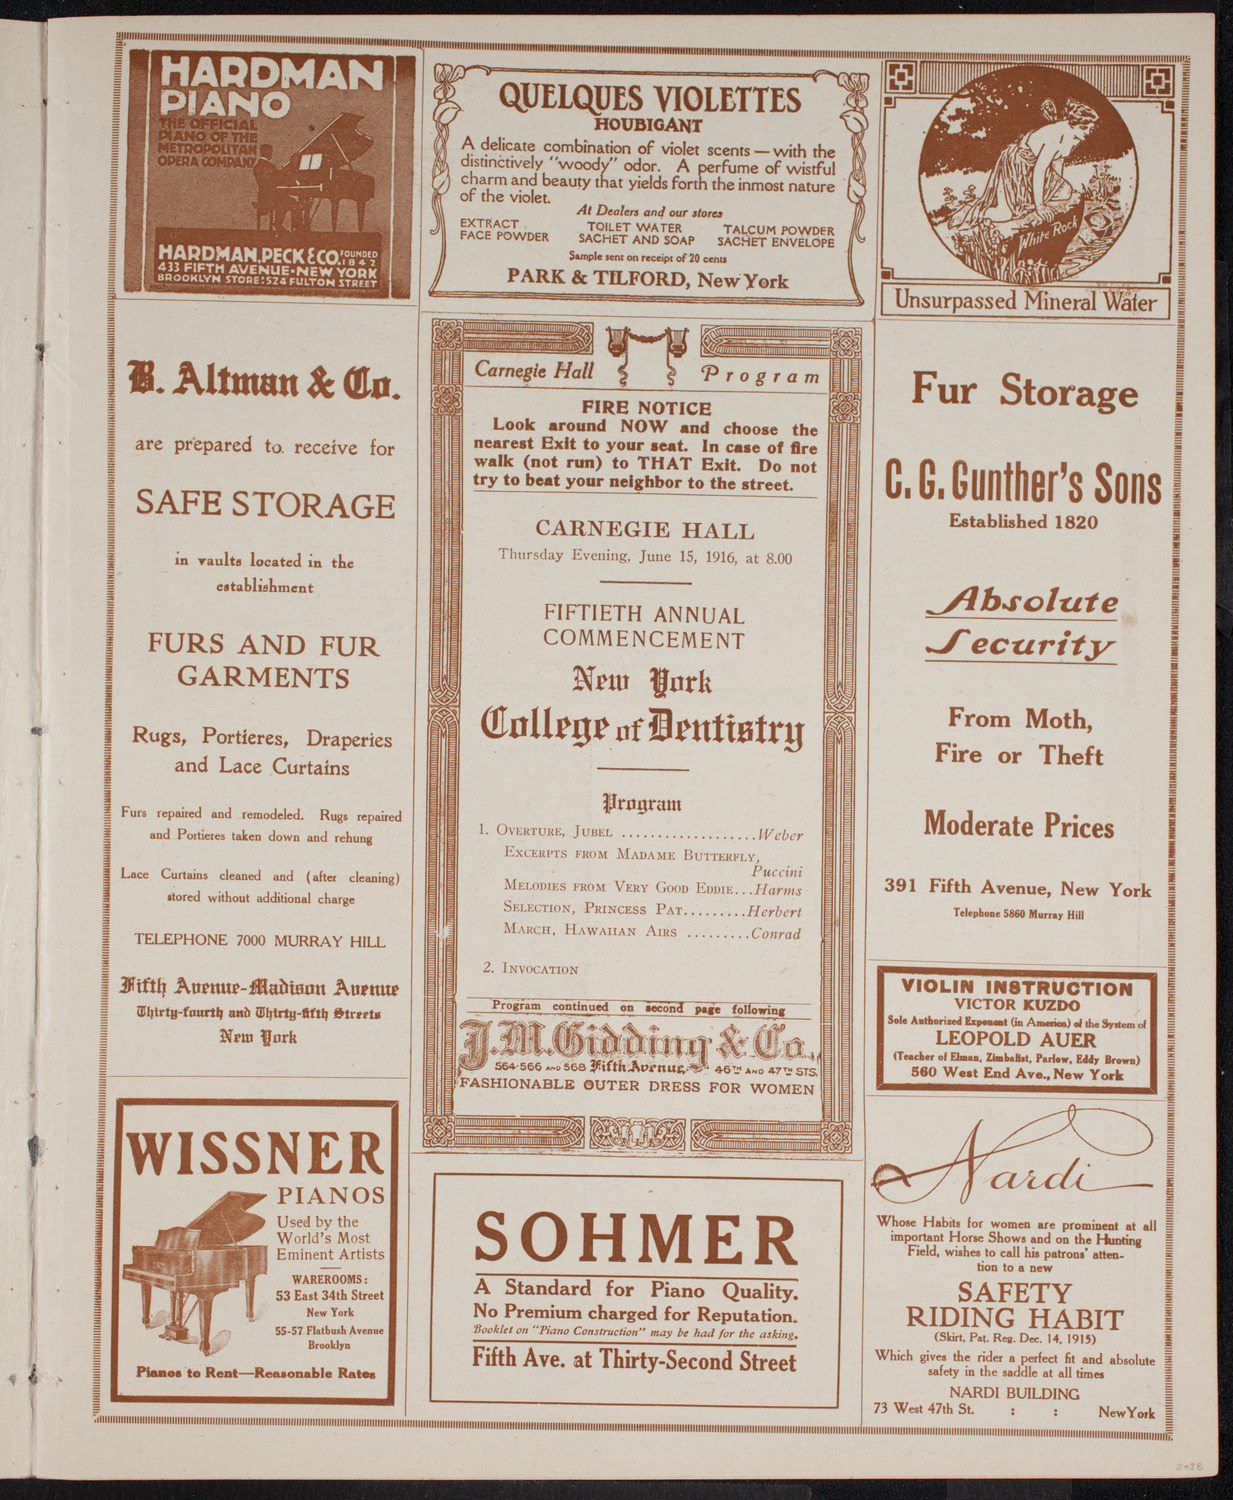 Graduation: New York College of Dentistry, June 15, 1916, program page 5